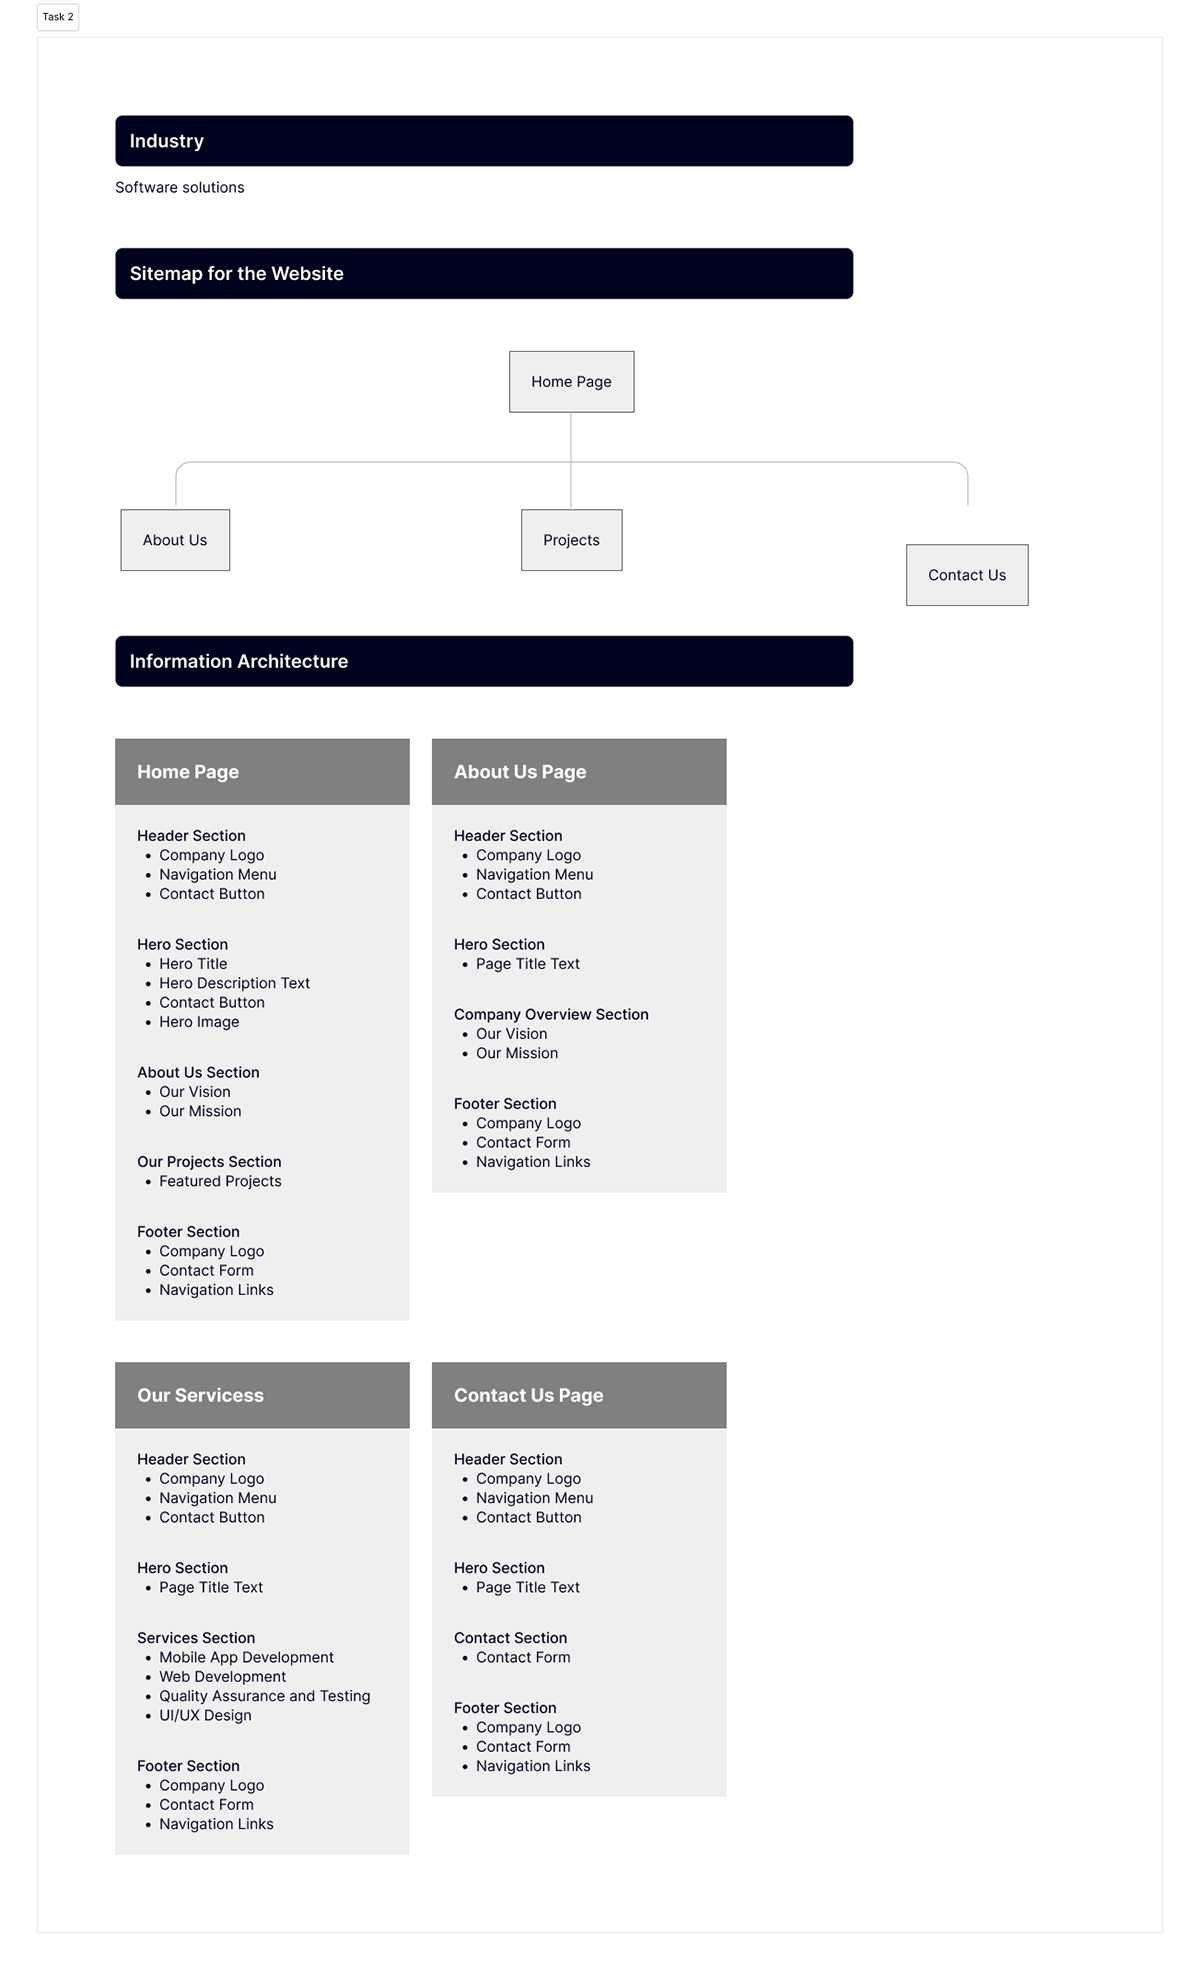 Sitemap Website Design information architecture  UIUX design layout content design